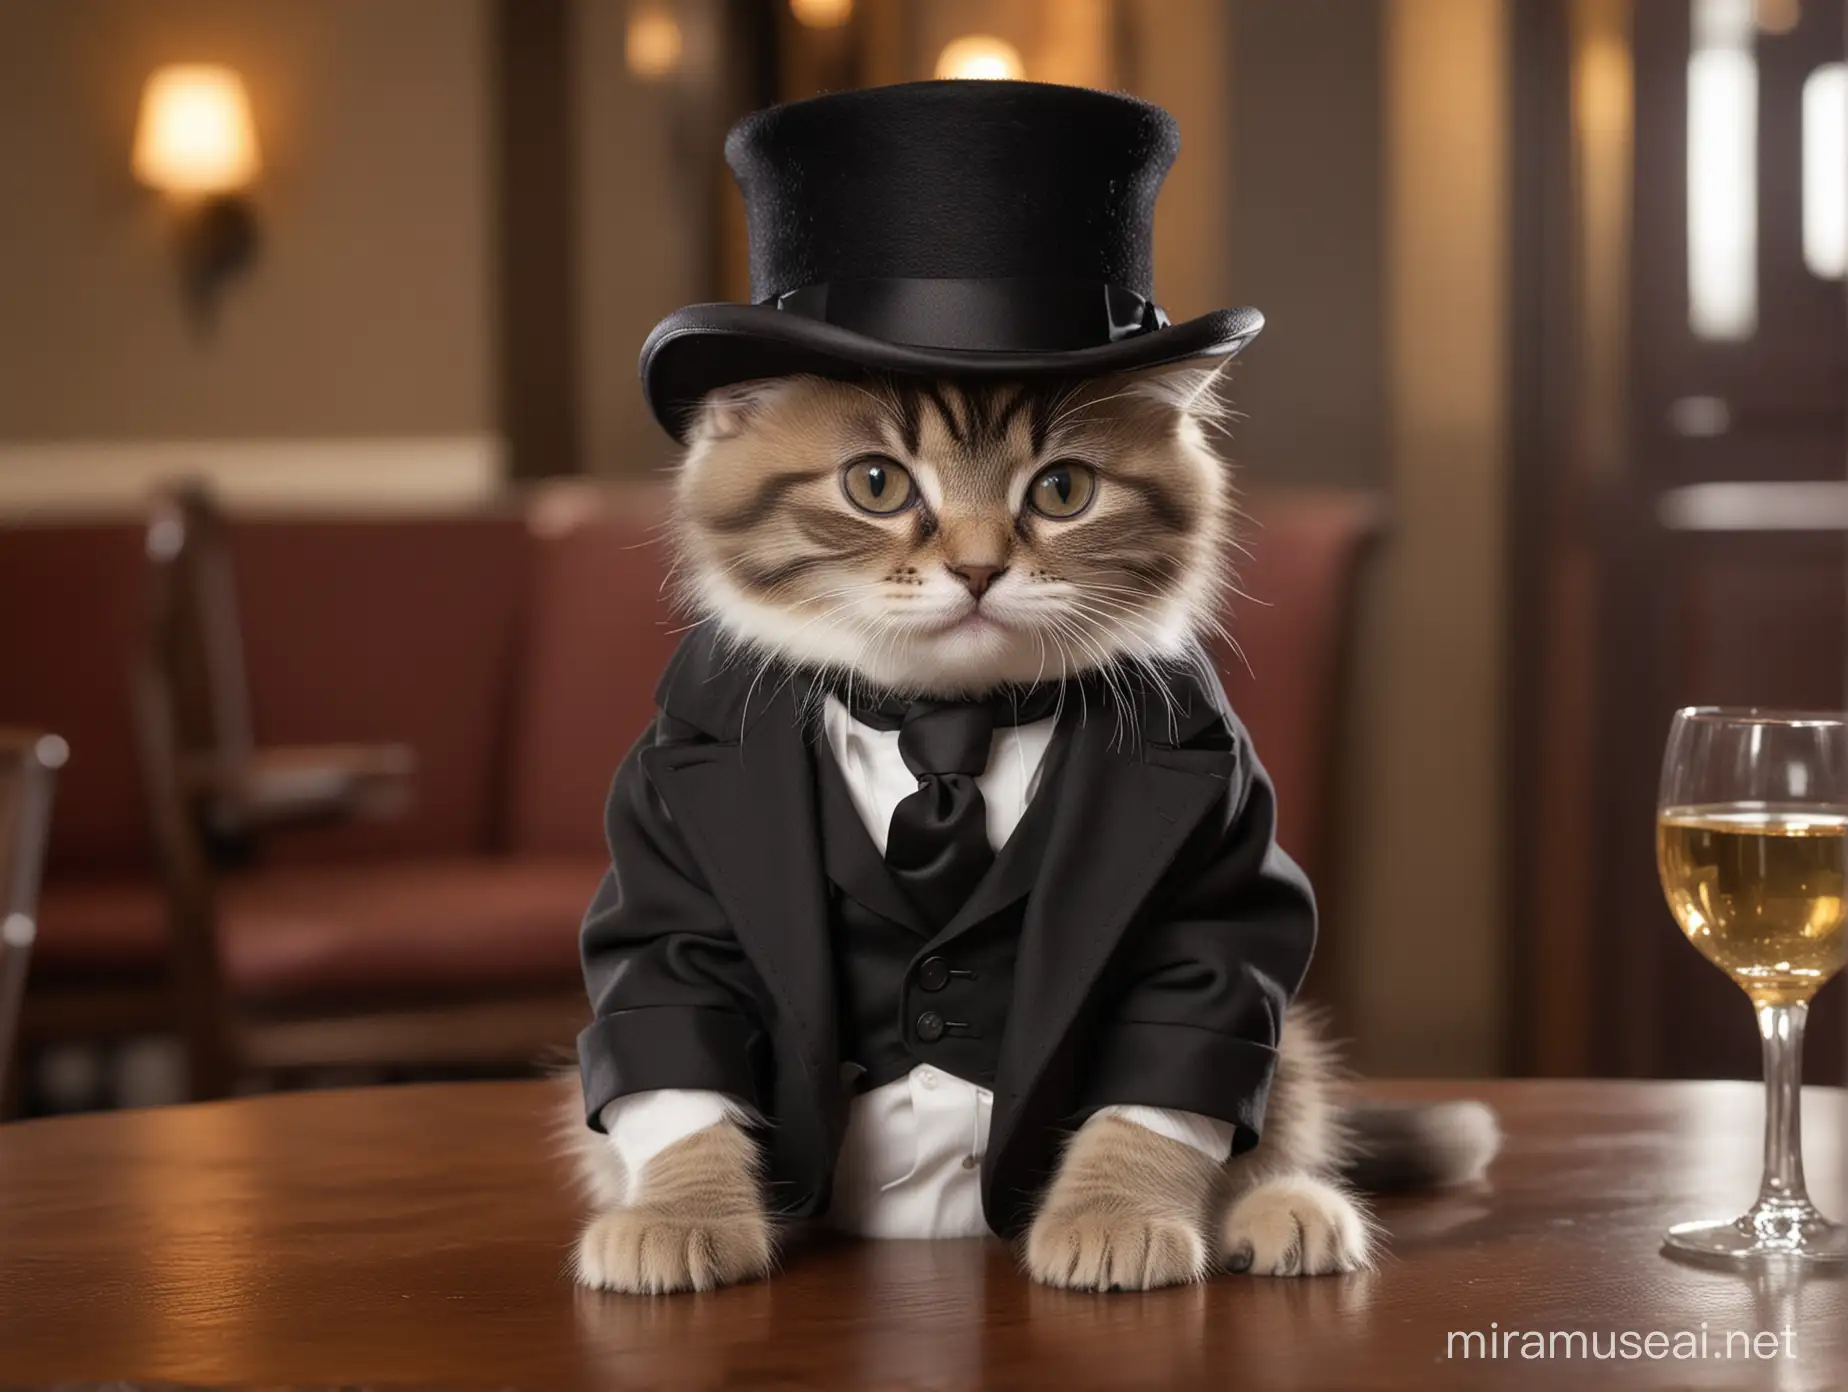 Elegant Kitten in Formal Attire at Upscale Steakhouse